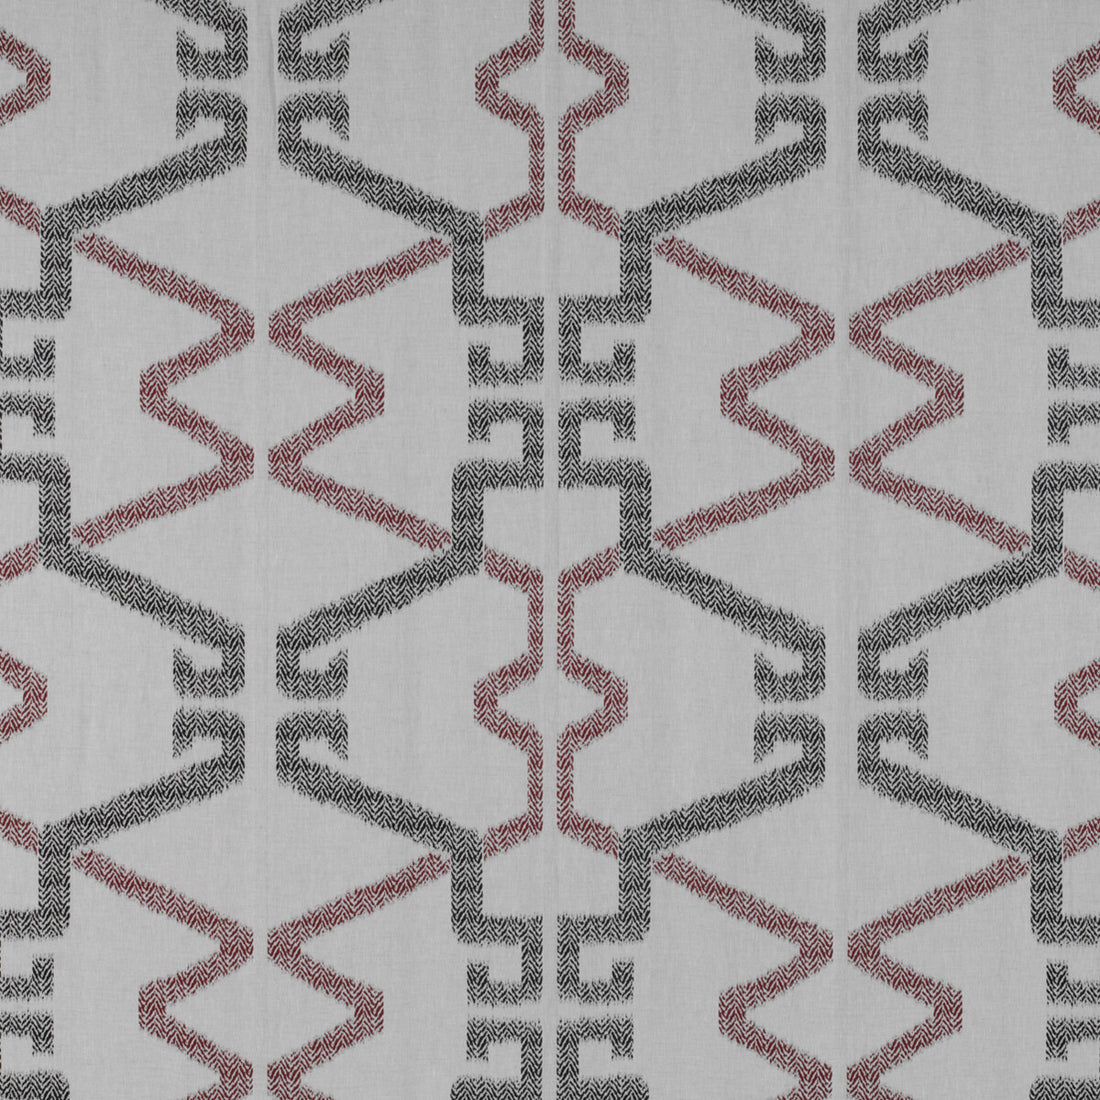 Caprera fabric in onyx/rojo color - pattern GDT5314.003.0 - by Gaston y Daniela in the Tierras collection